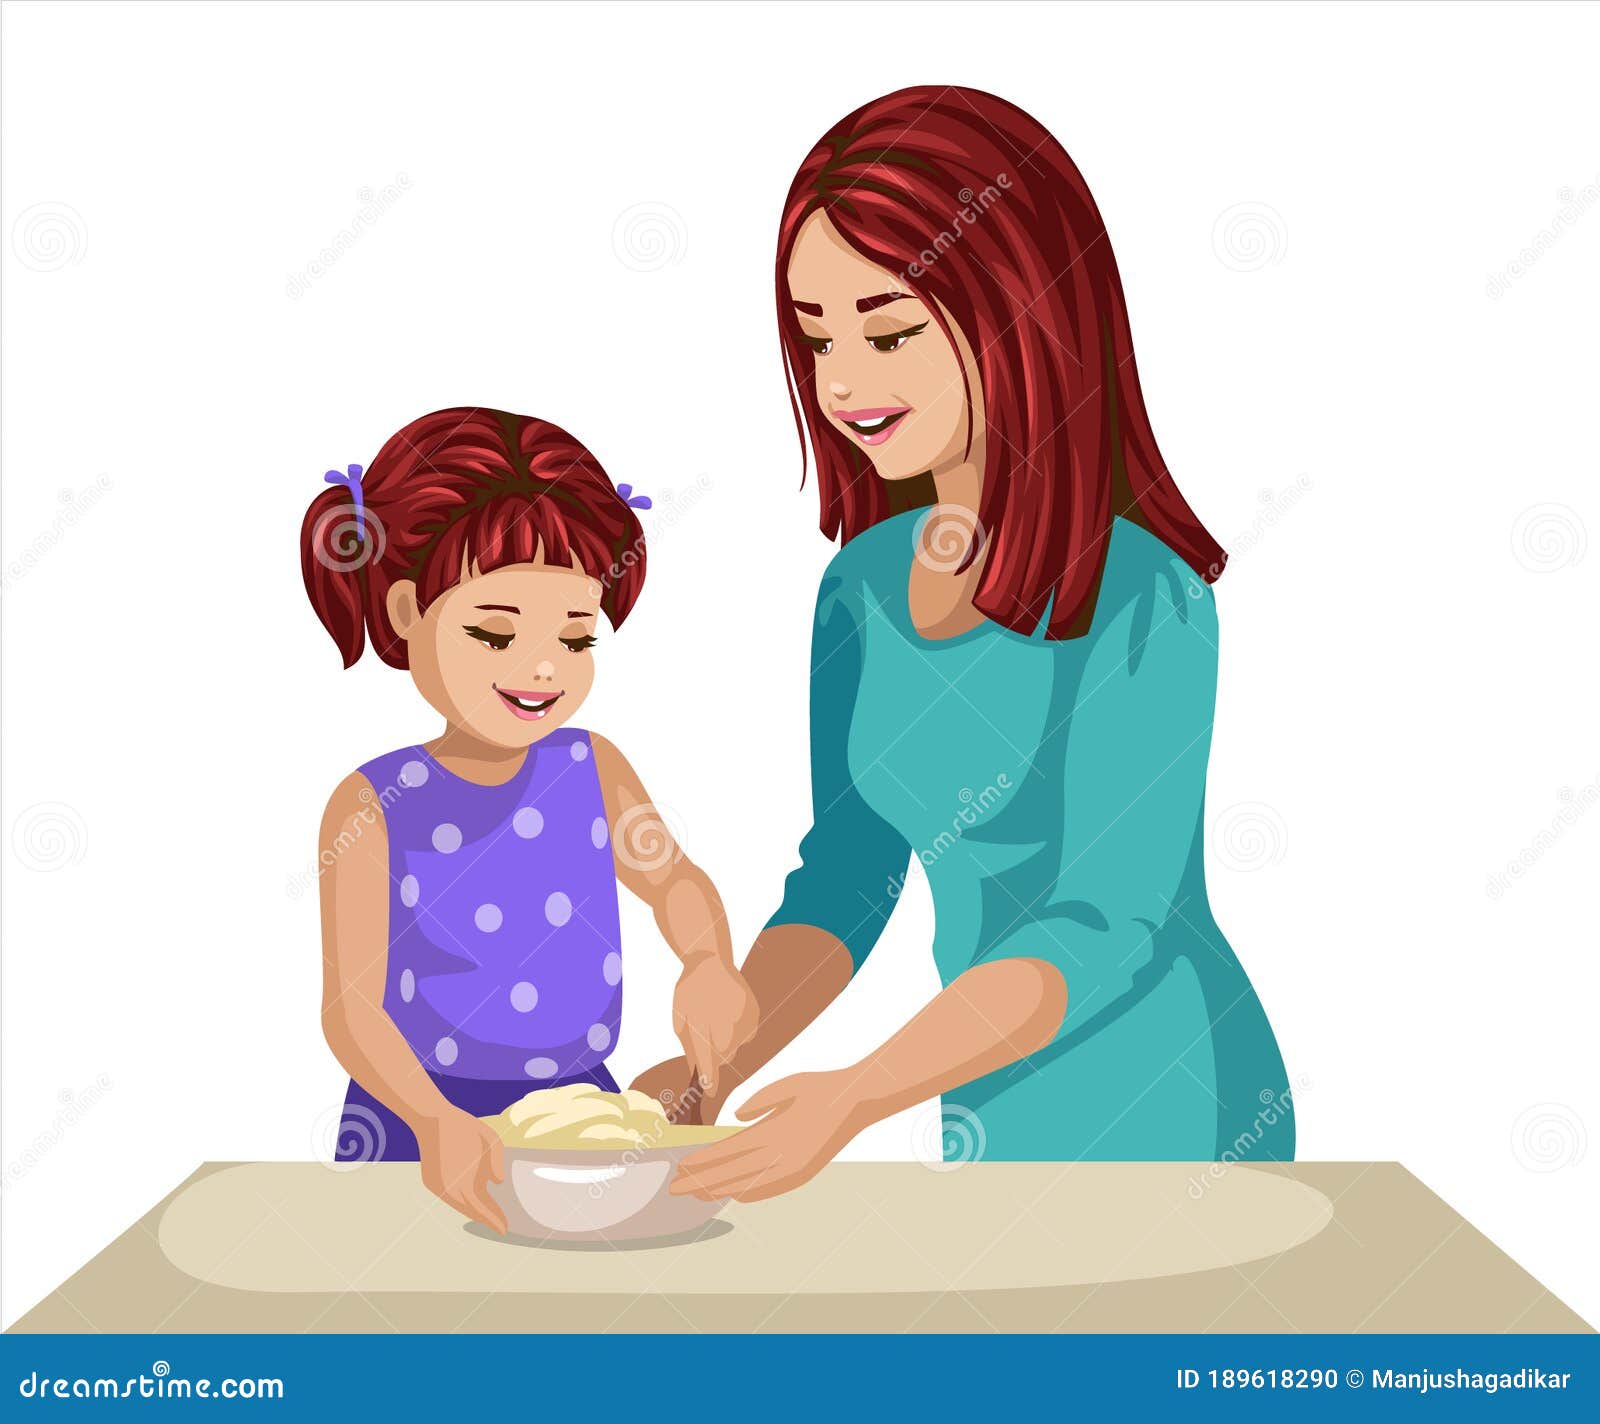 https://thumbs.dreamstime.com/z/little-girl-enjoying-cooking-her-mother-little-girl-enjoying-cooking-her-mother-helping-kitchen-189618290.jpg